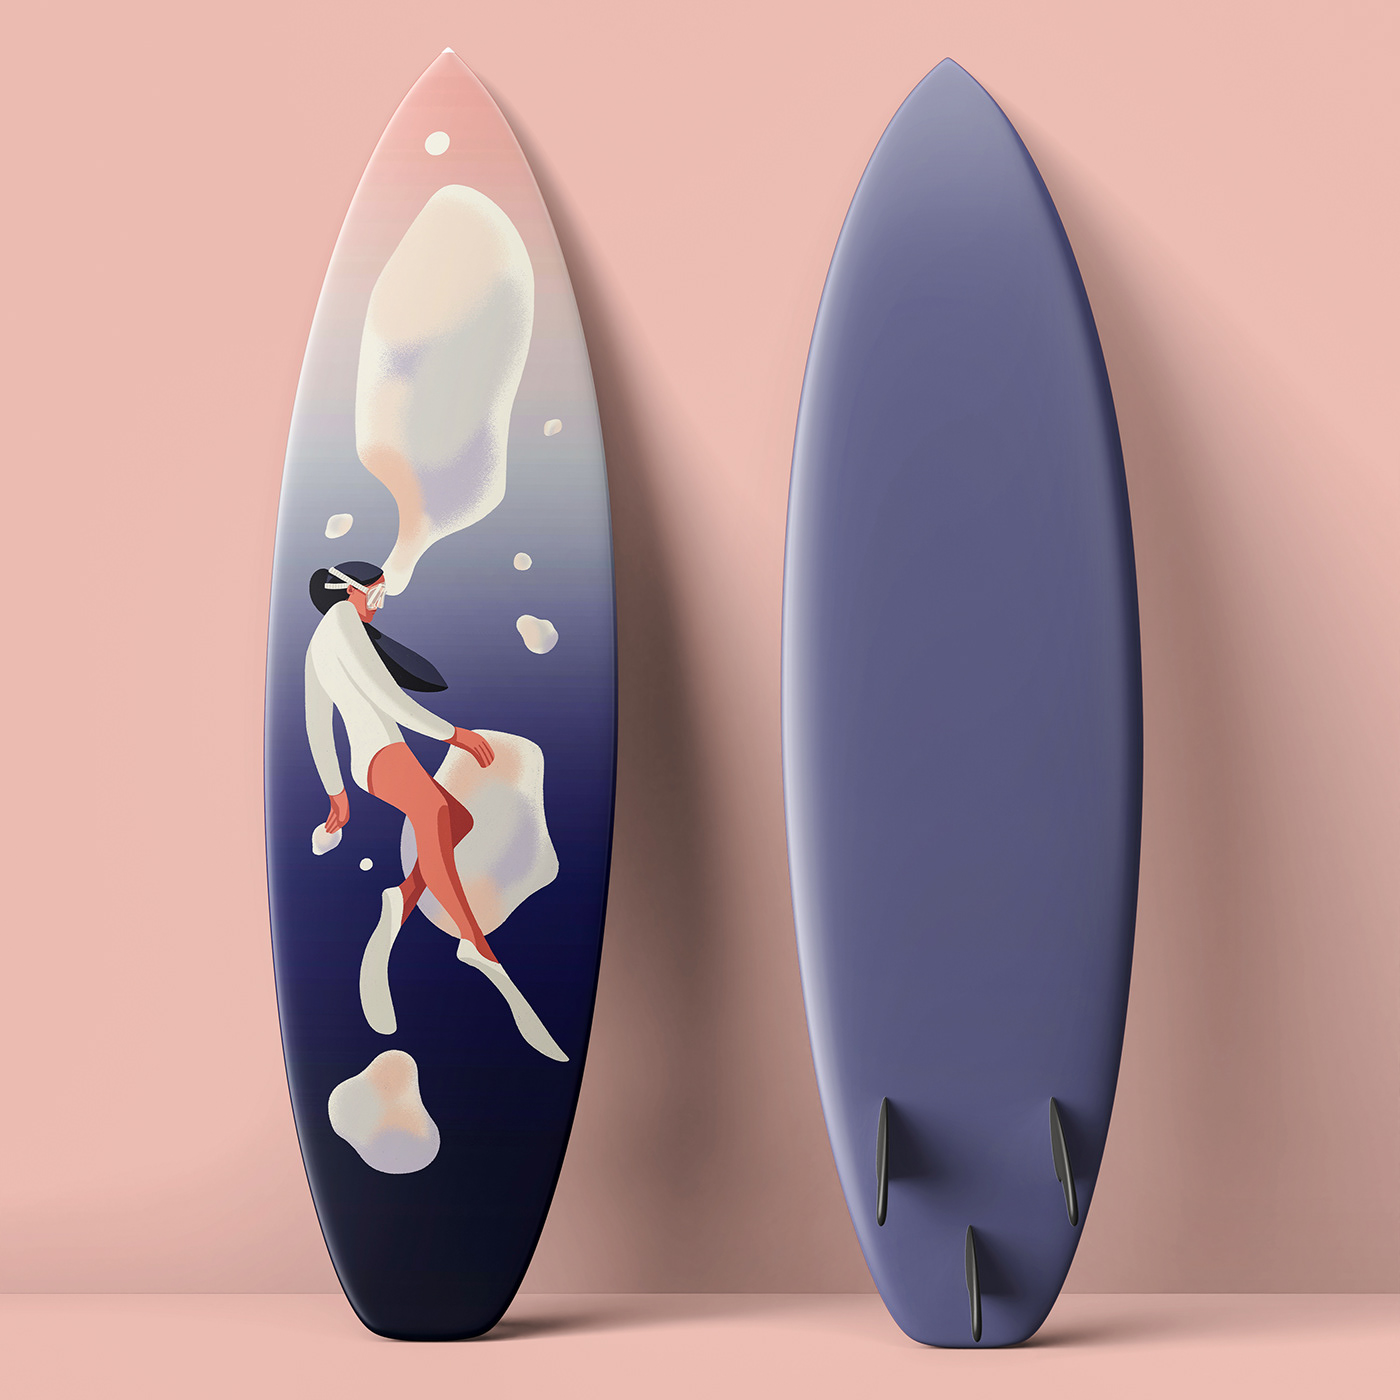 Digital Art  DRCORATION hainan sea surfboard surfing